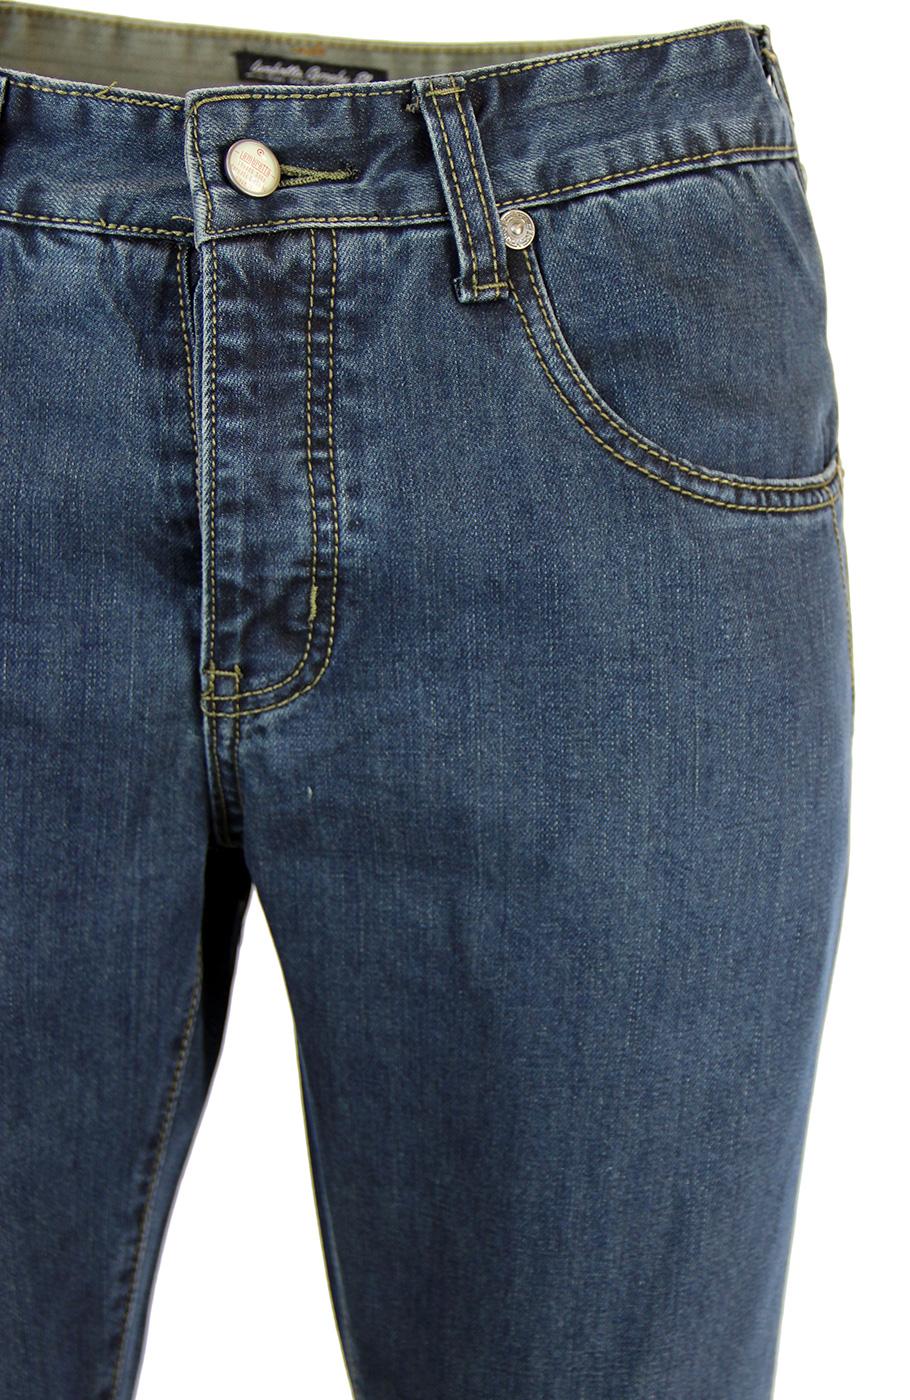 LAMBRETTA Mens Retro Indie Target Pocket Jeans in Overdye